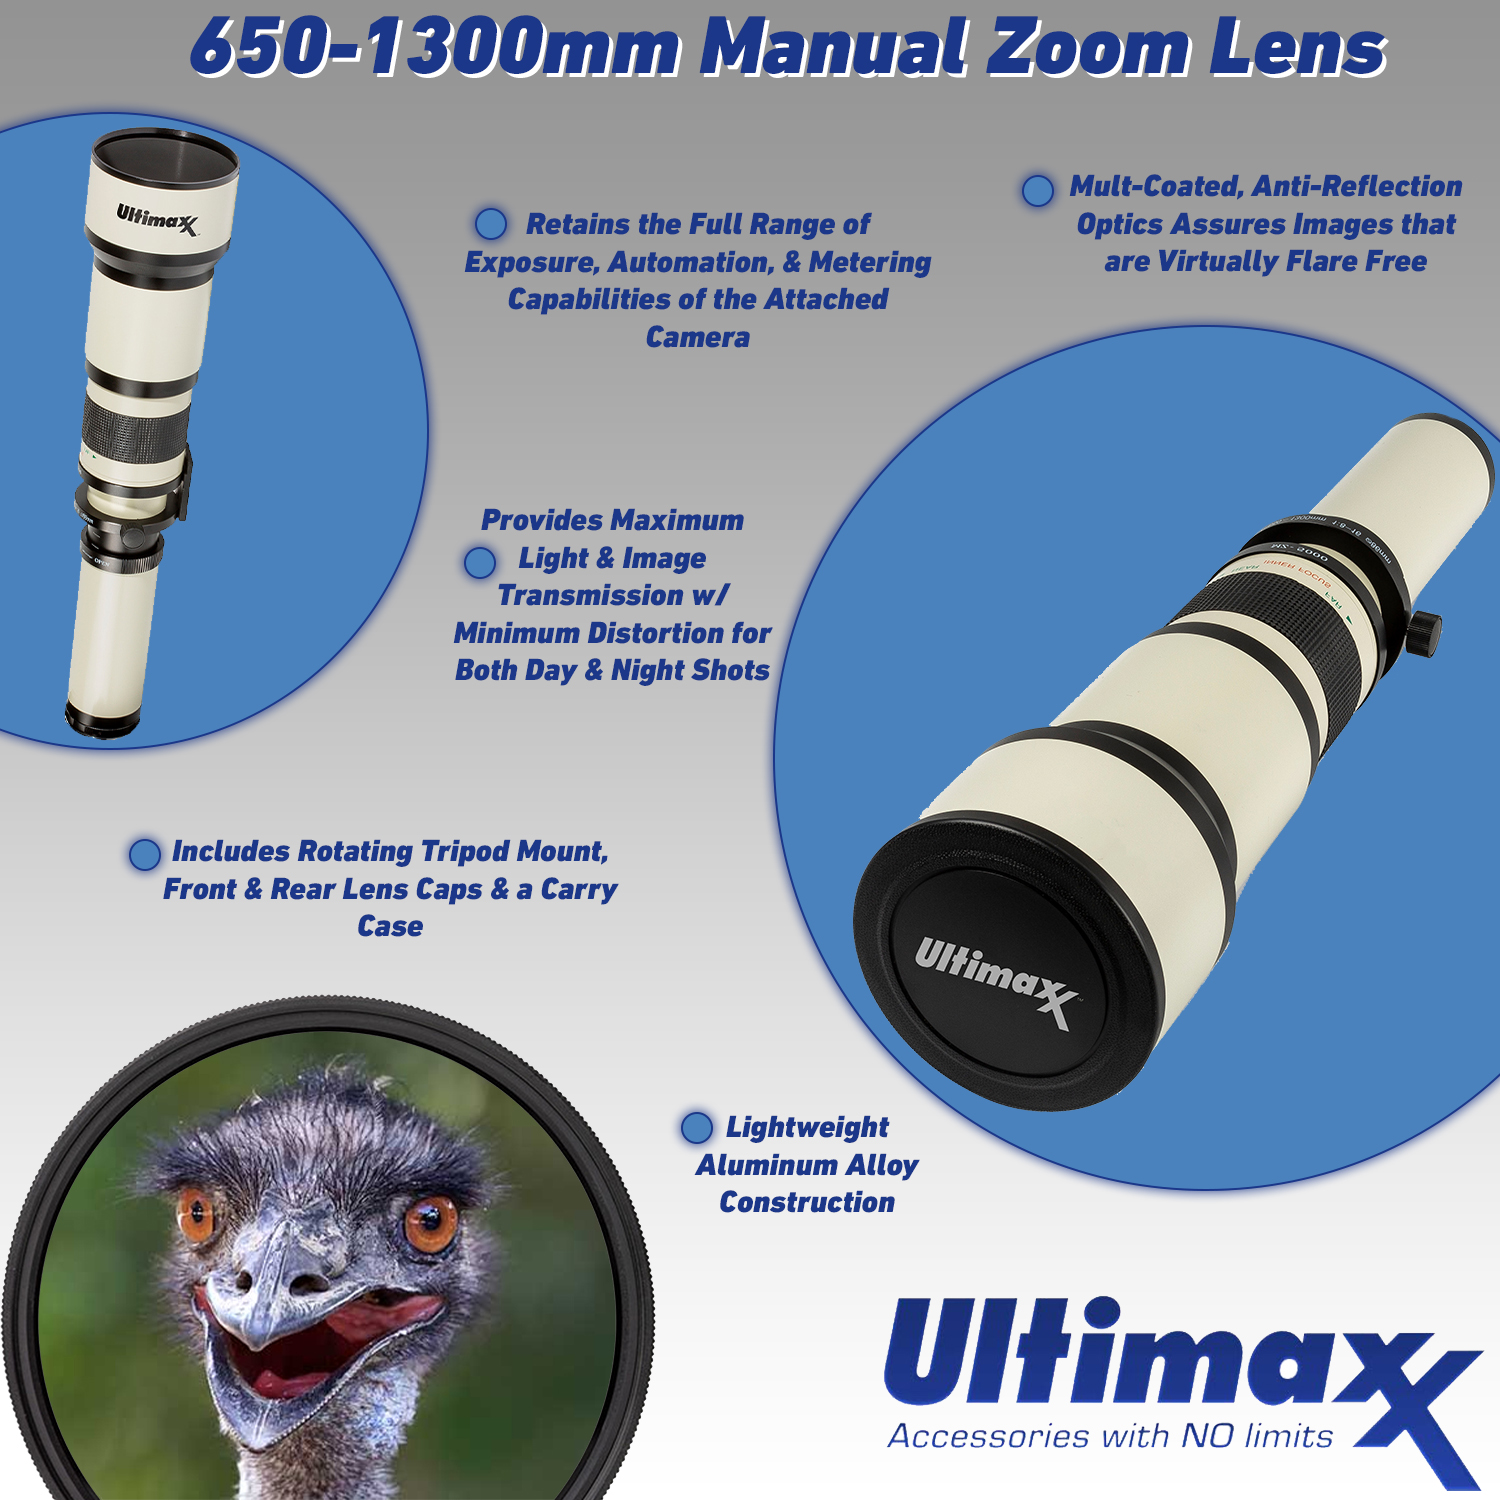 Ultimaxx 650-1300mm f/8-16 Manual Zoom Lens for Nikon Z7, Z7 II, Z6, Z6 II, Z5, Z50 Mirrorless Cameras & Other Z-Mount Cameras & Basic Bundle - Includes: 2x Converter for T-Mount Lenses & More - image 2 of 6